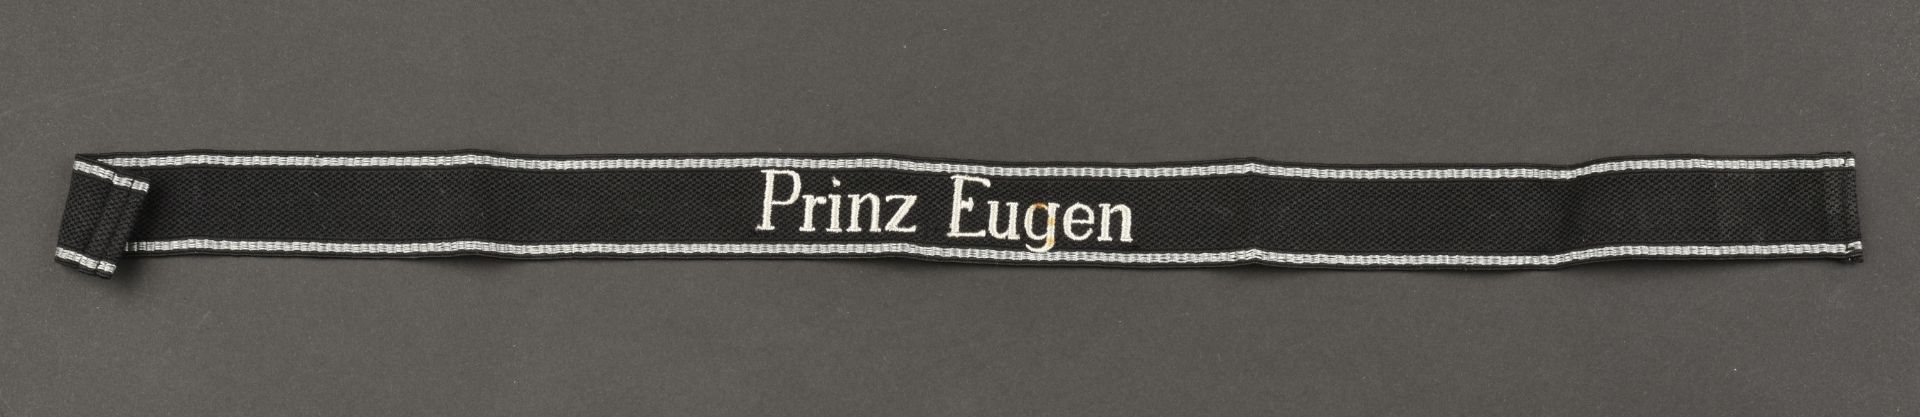 Bande de bras Prinz Eugen. Prinz Eugen cufftittle.